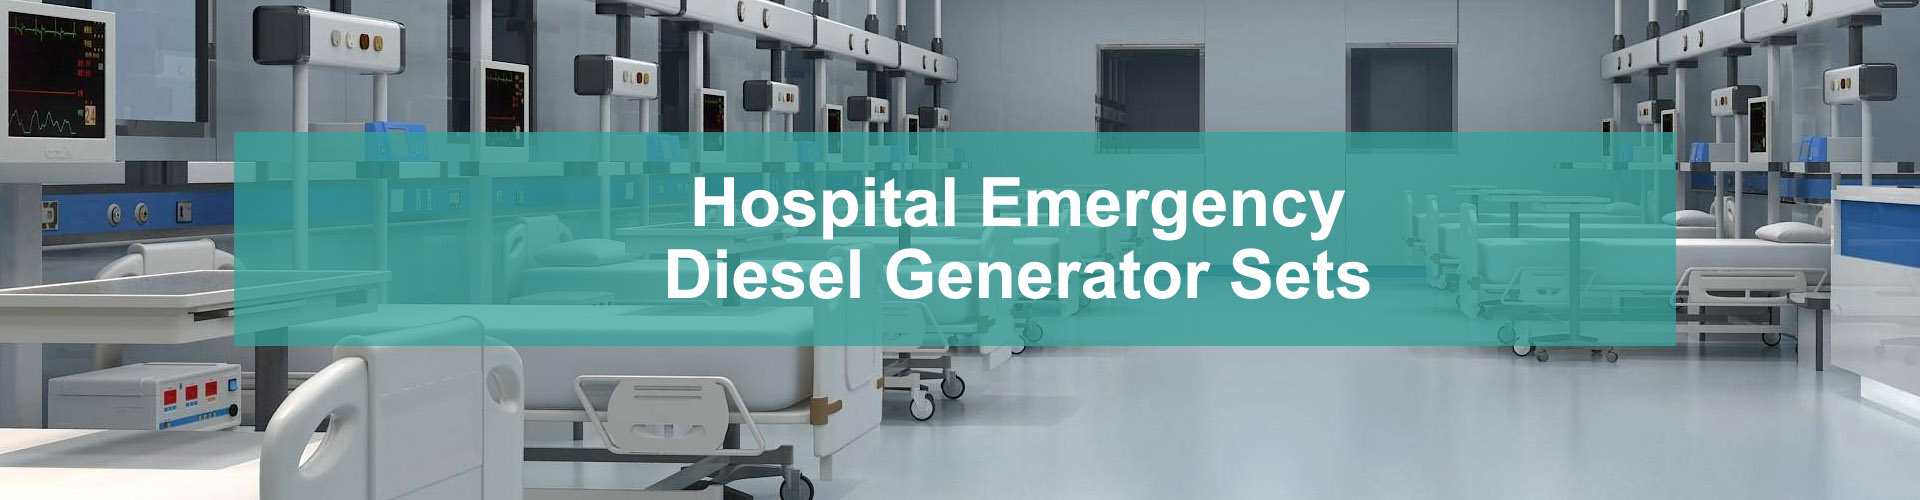 Hospital use diesel generator set Leton power stable power solution for hospitalImage